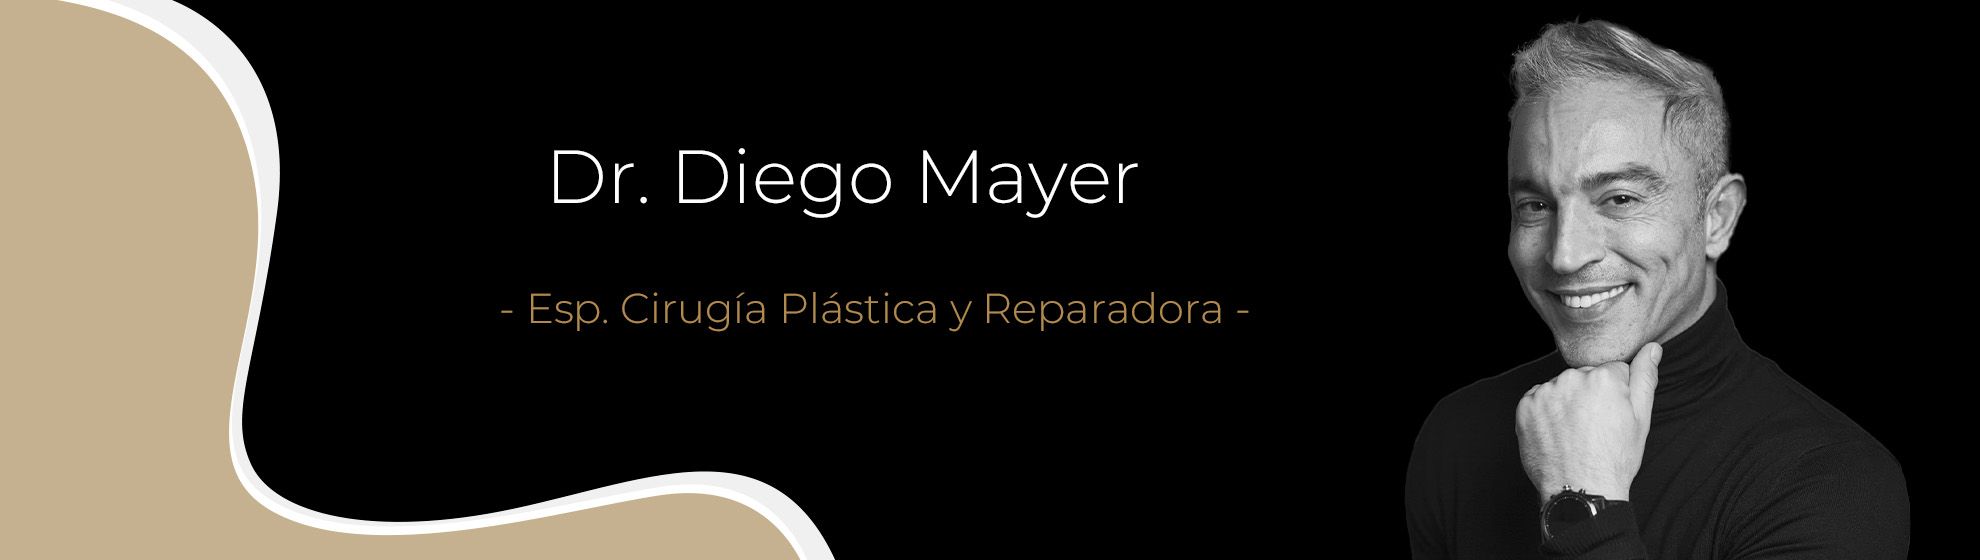 Dr. Diego Mayer